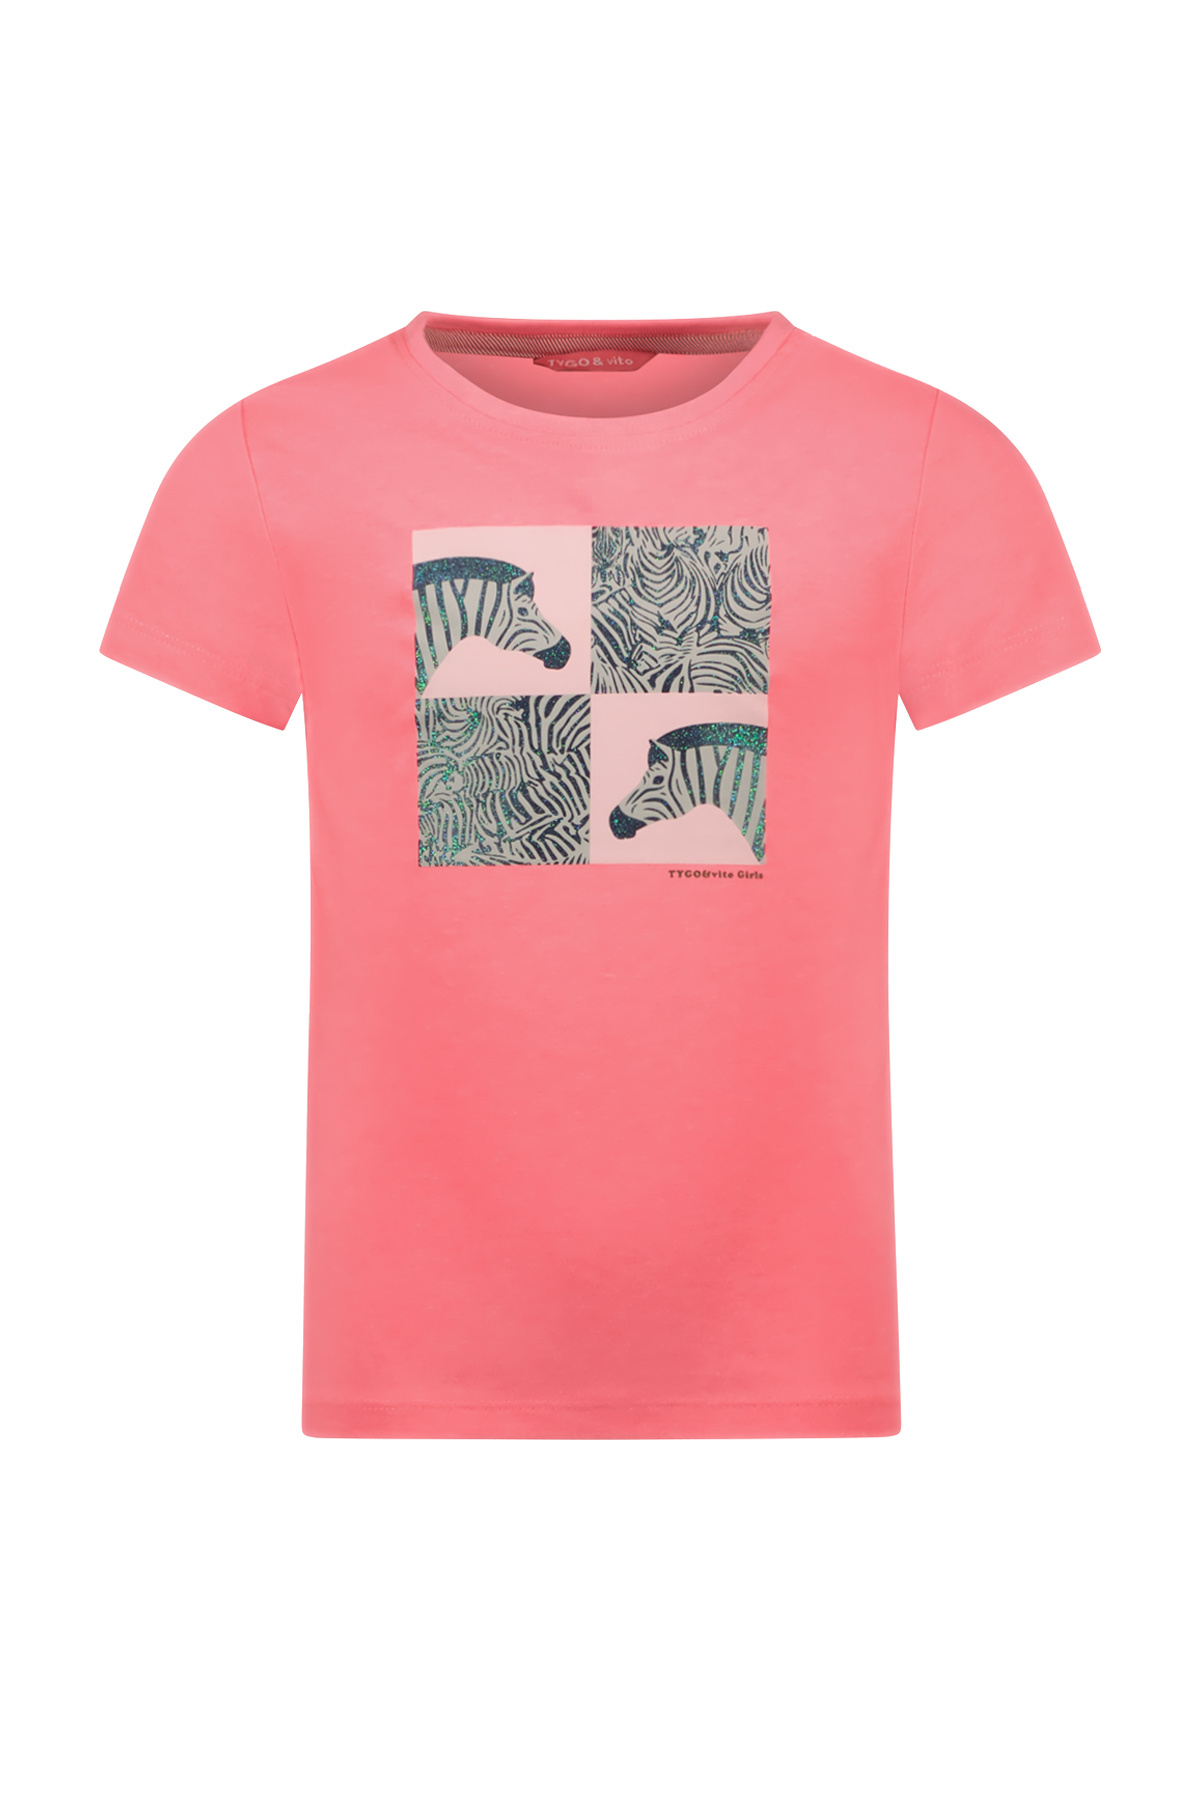 Tygo & Vito Meisjes t-shirt - Print - Neon roze